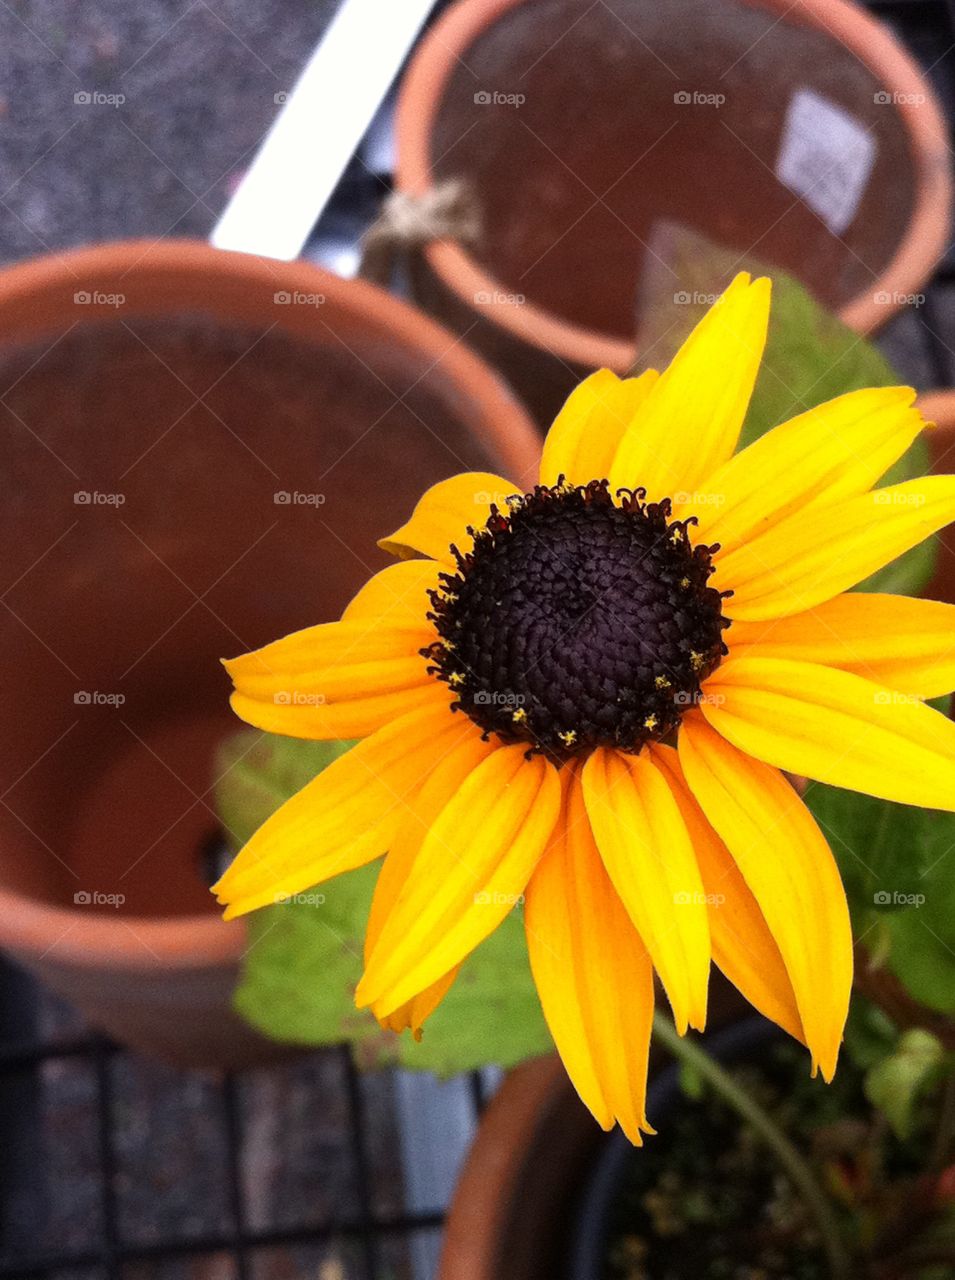 Sunflowers follow the sun's movements...